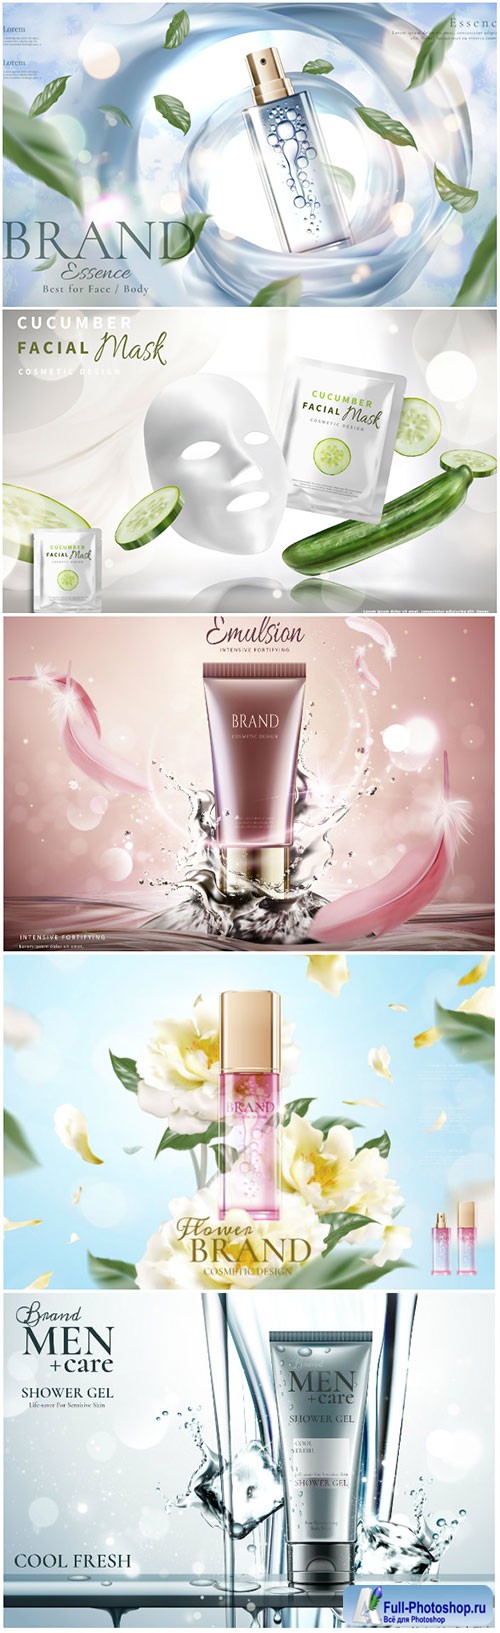 Skincare banner ads in 3d vector illustration